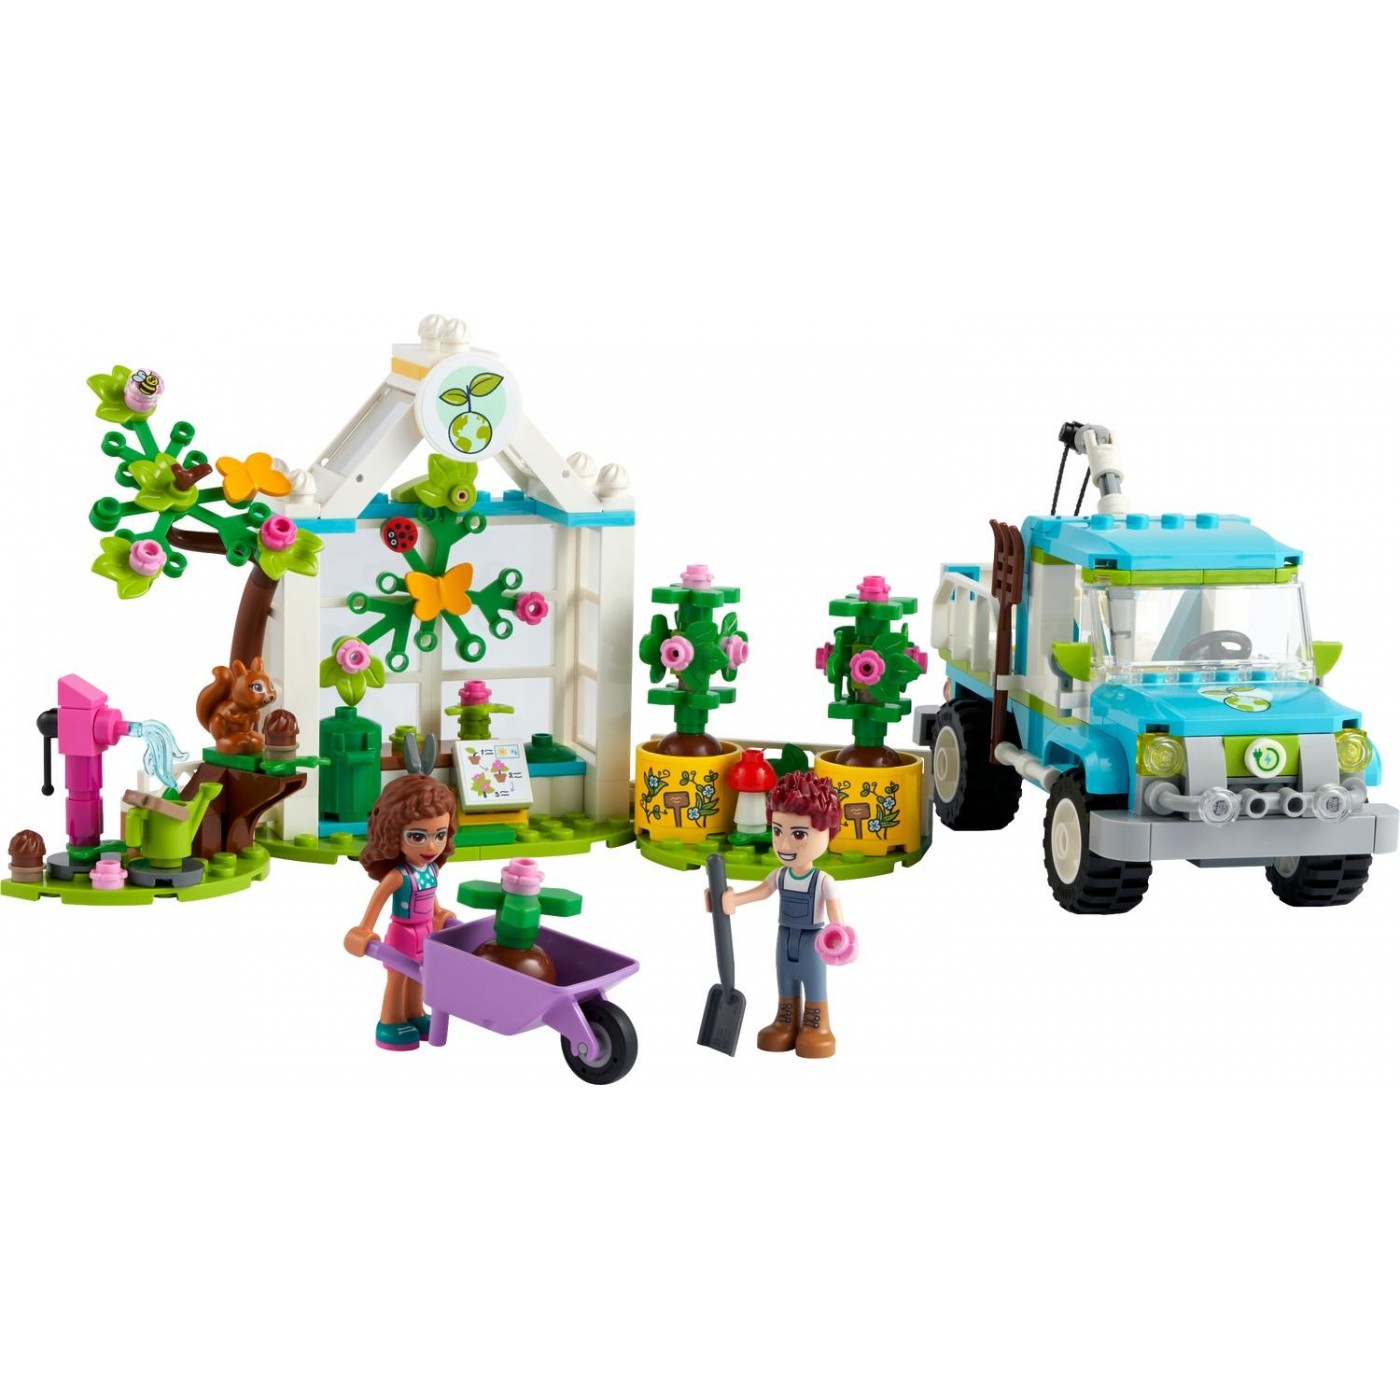 LEGO Friends Tree Planting Vehicle (41707)